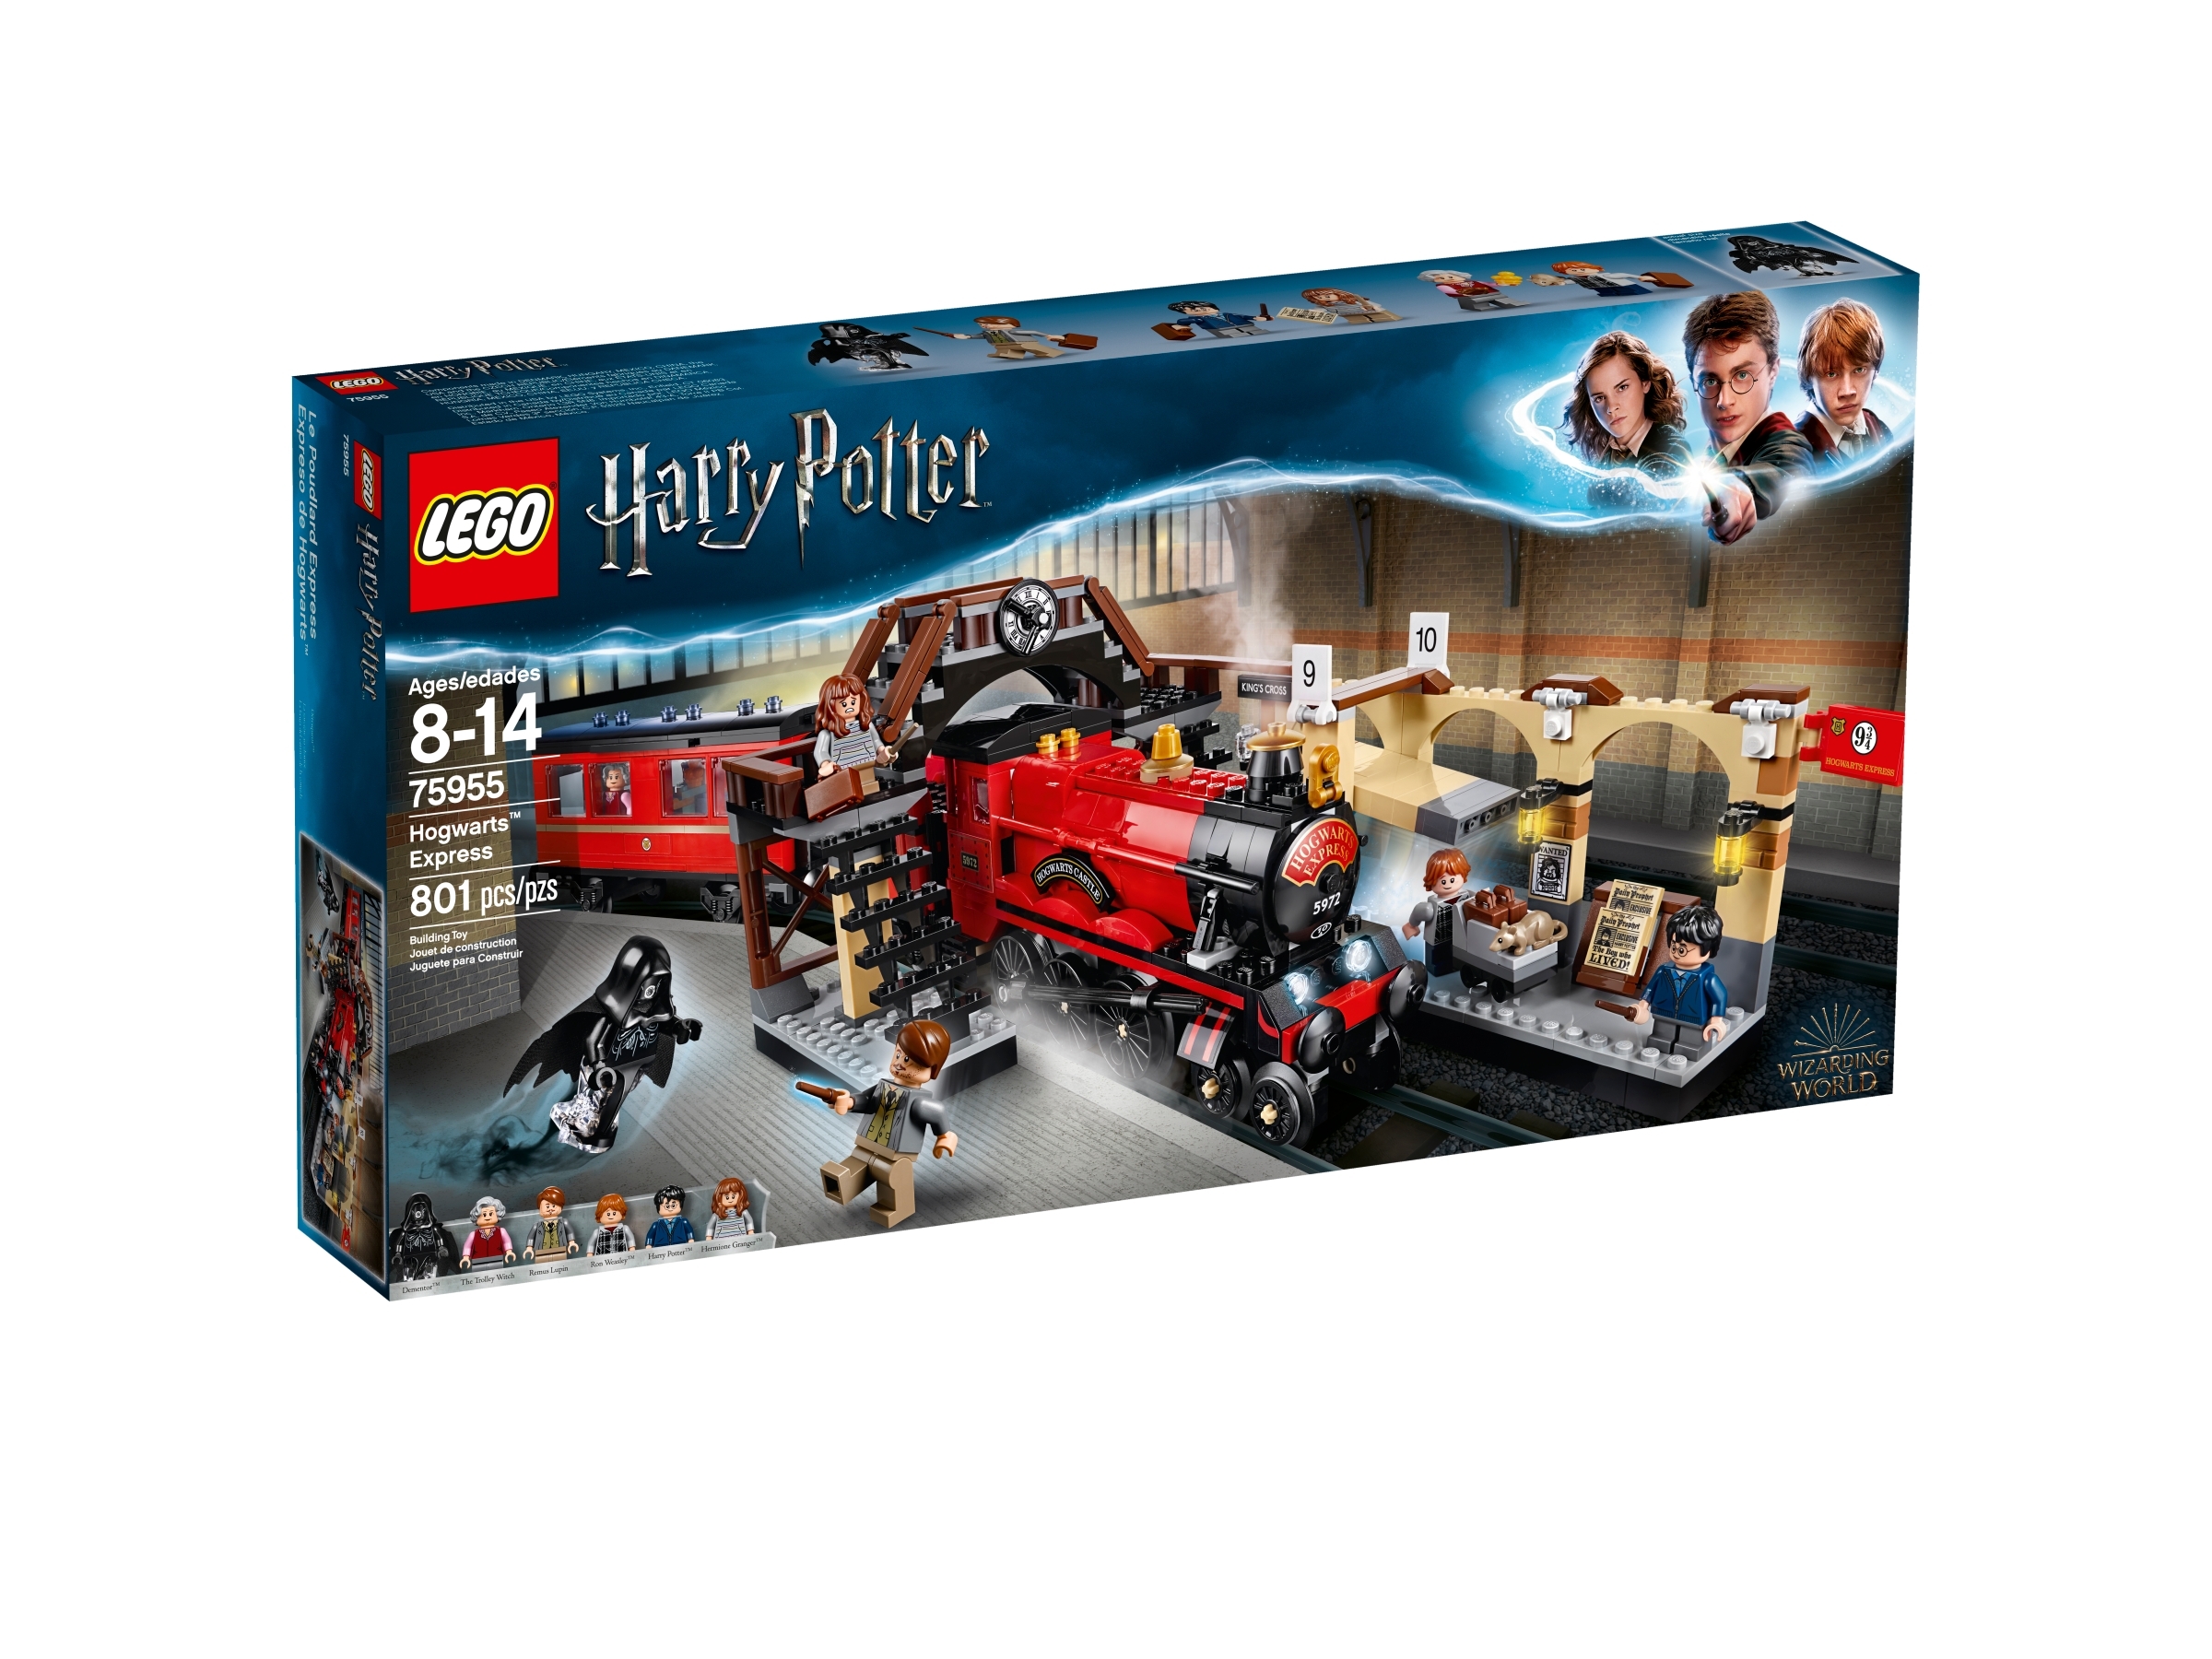 LEGO Harry Potter Hogwarts Express 75955 Building Kit 801 Pieces 